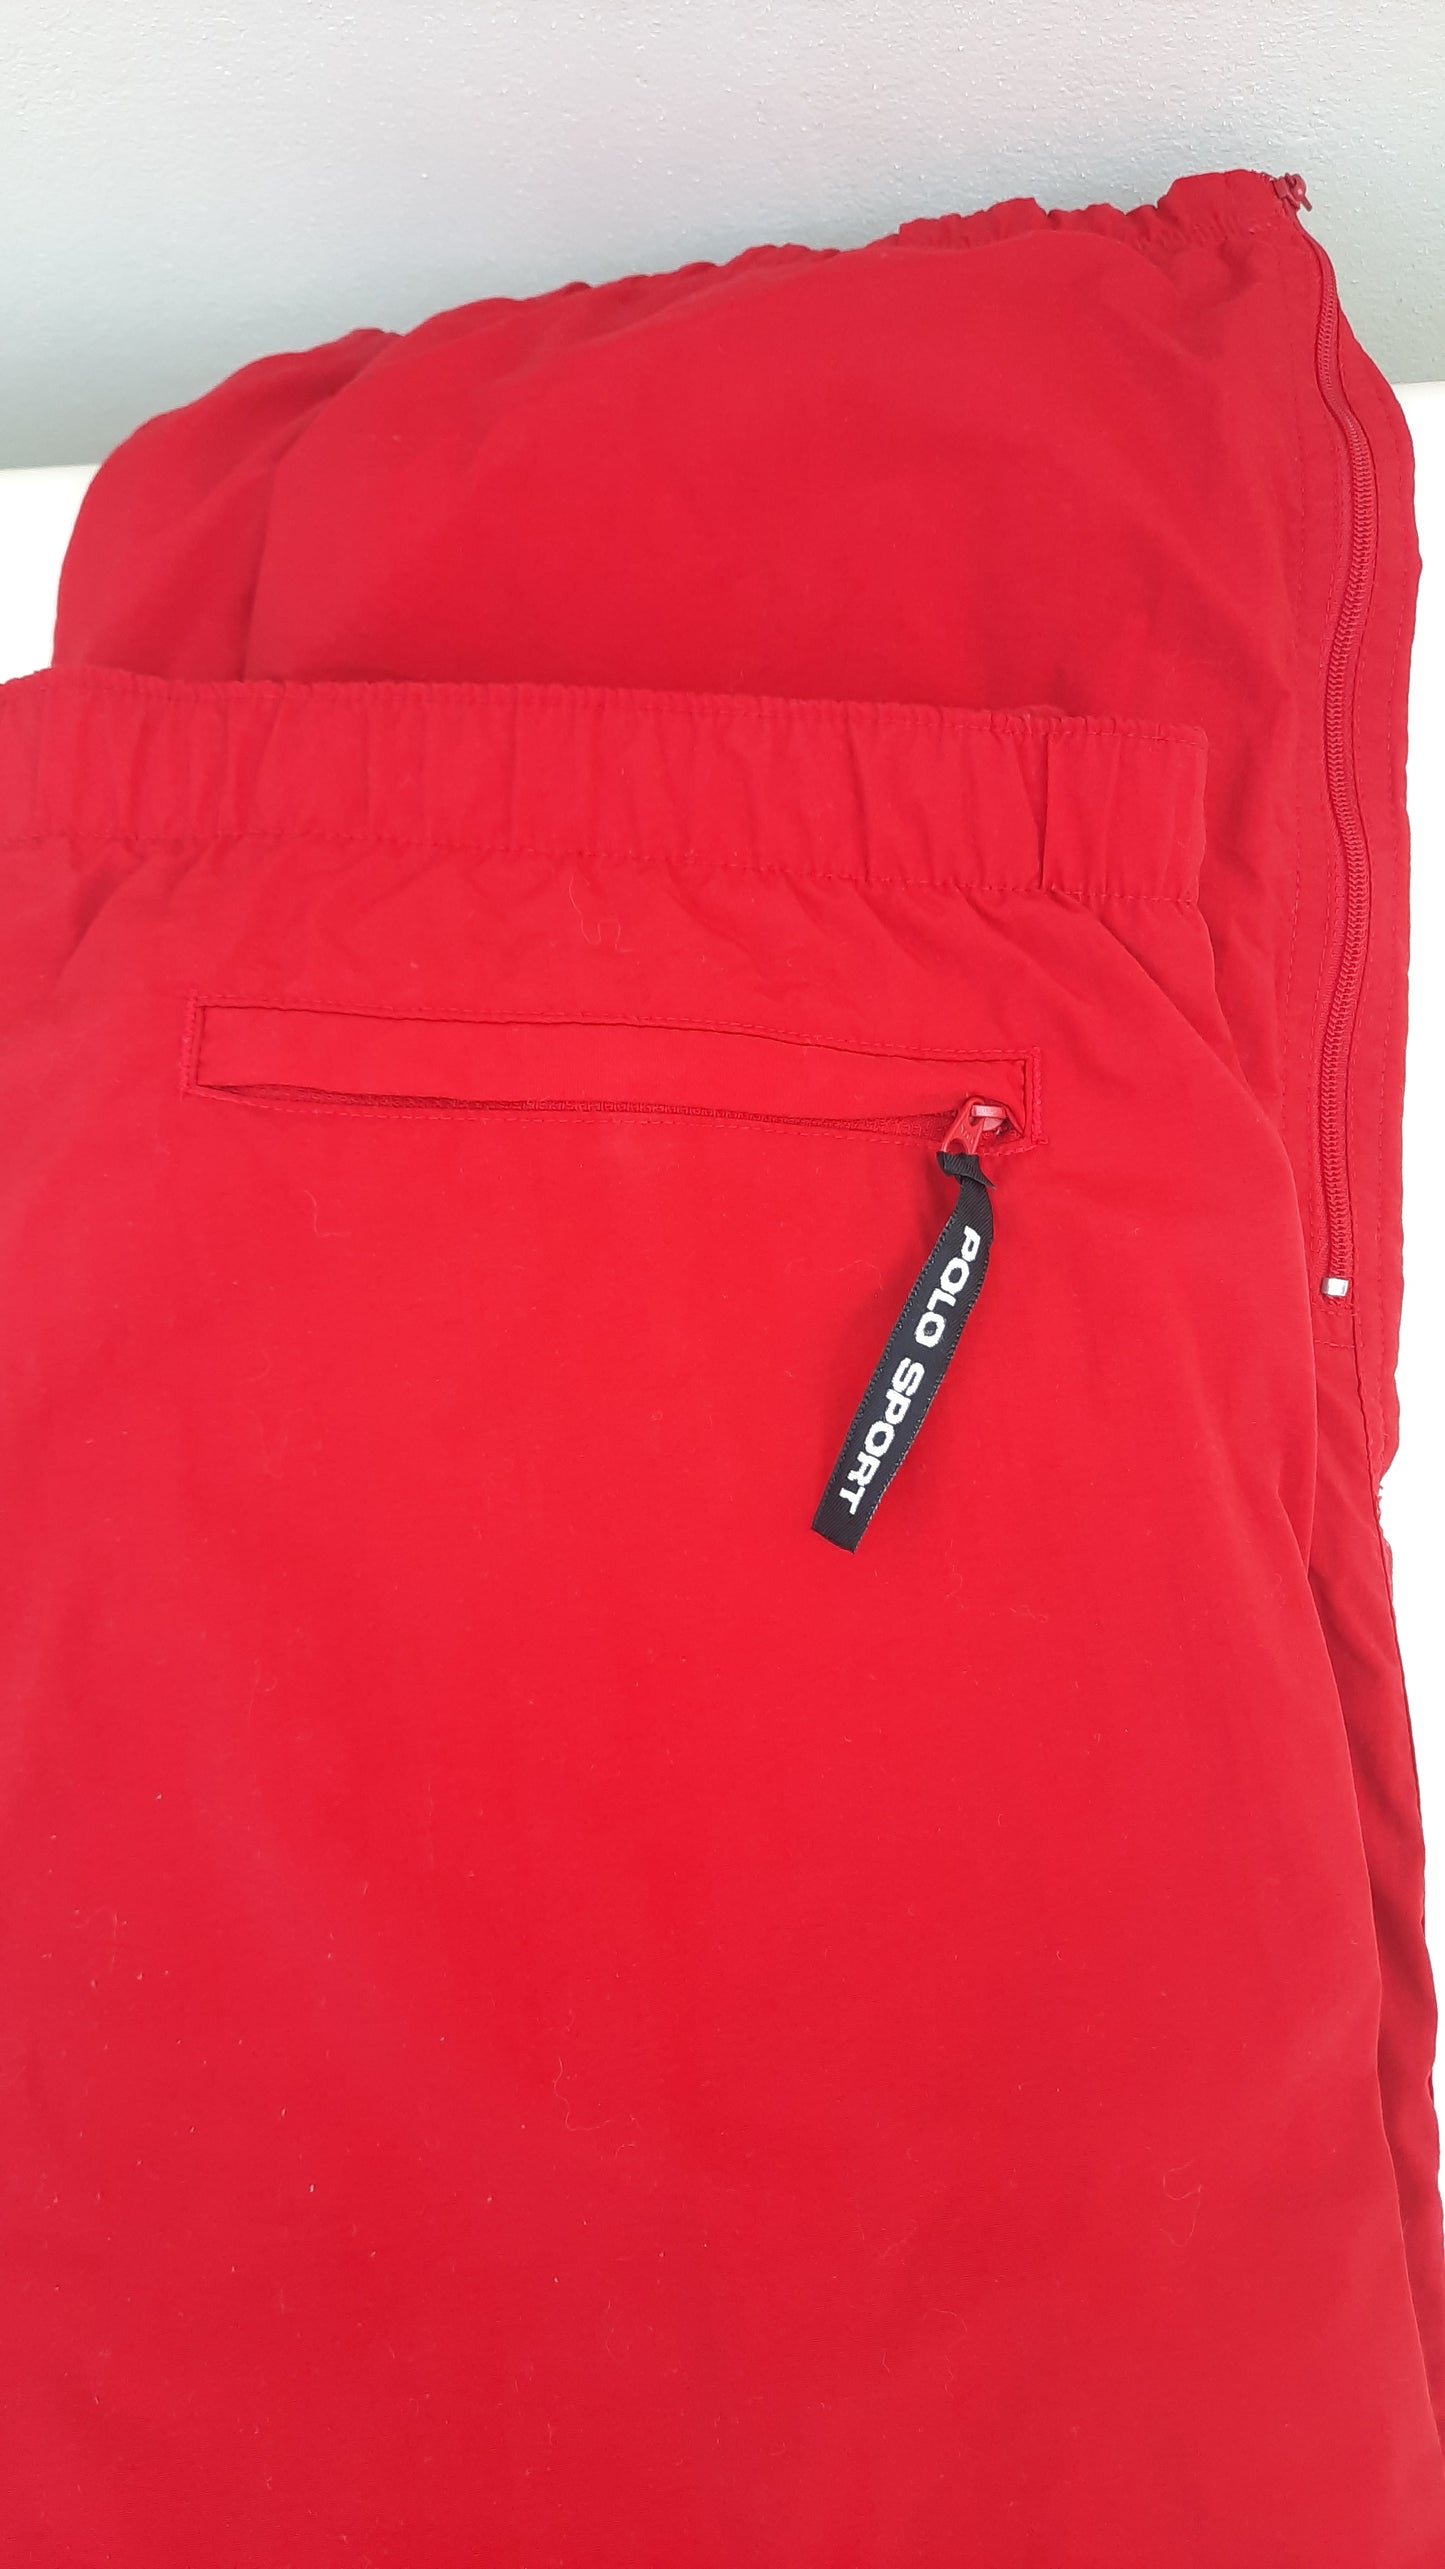 Vintage Polo Sport Ralph Lauren Red Track Pants